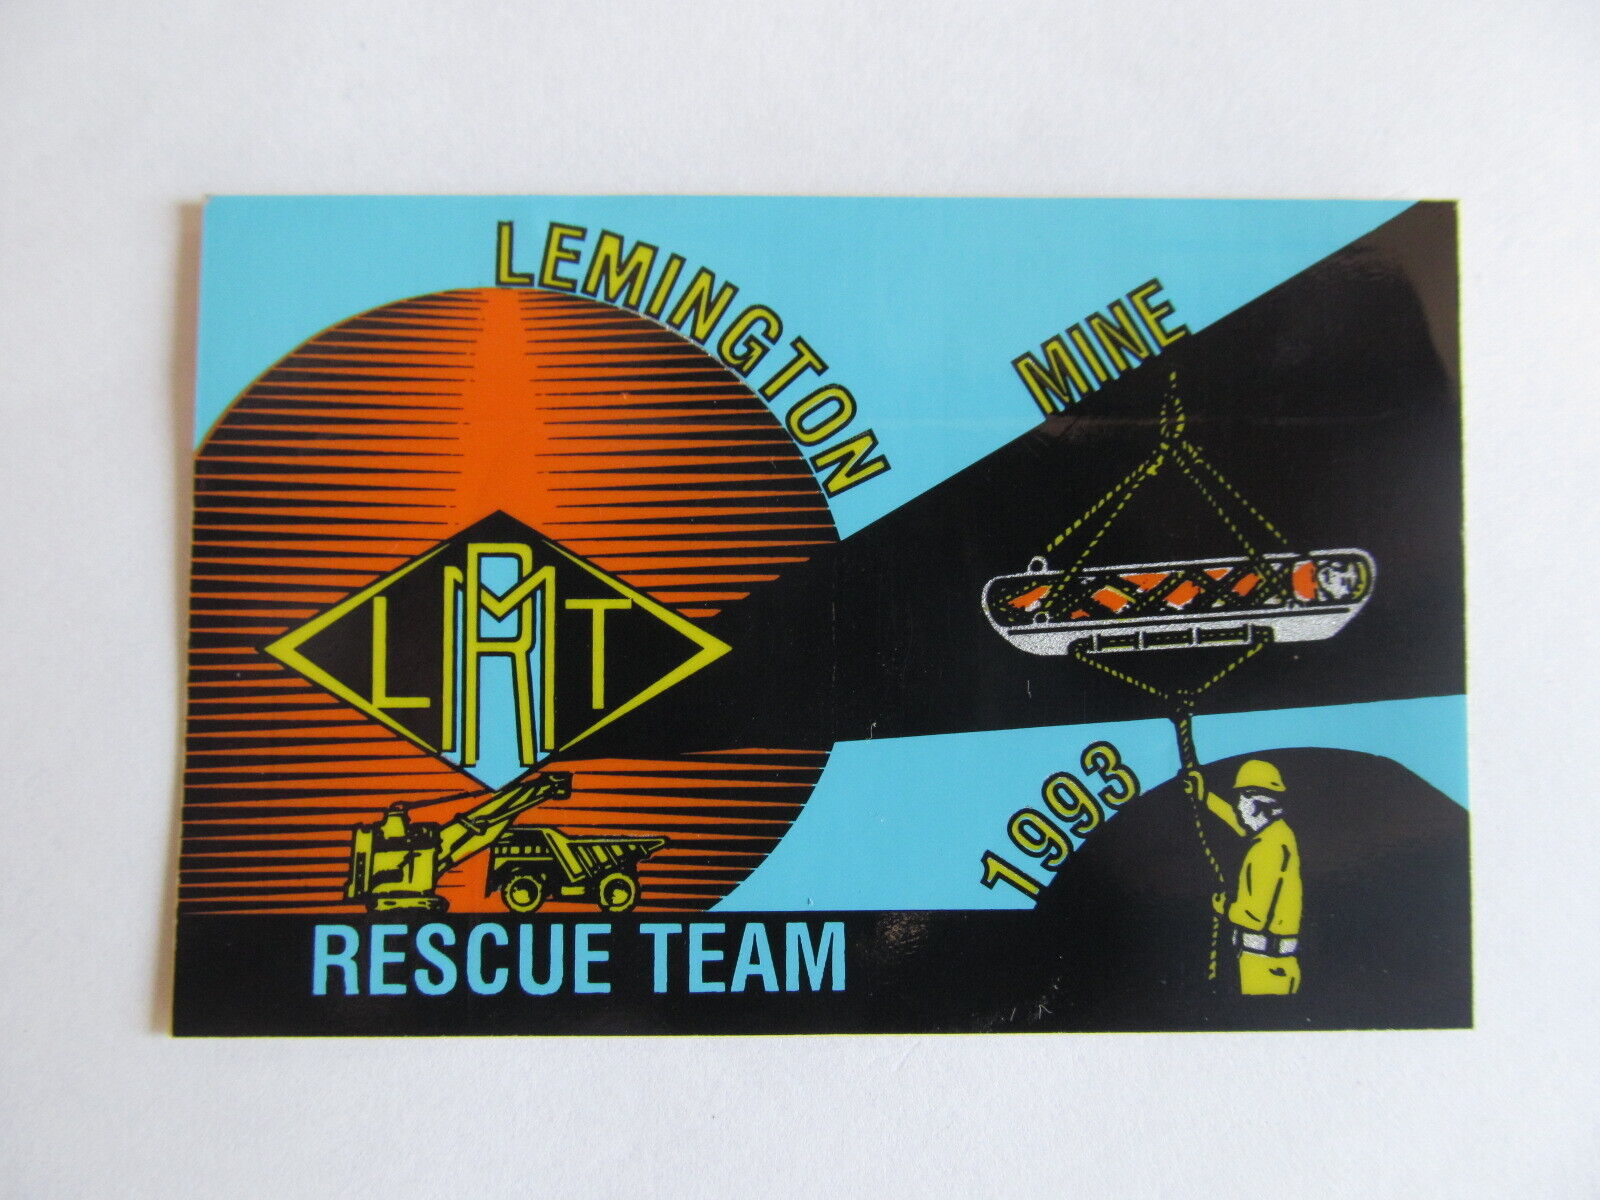 Coal Mining Stickers, Lemington Mine Rescue Team